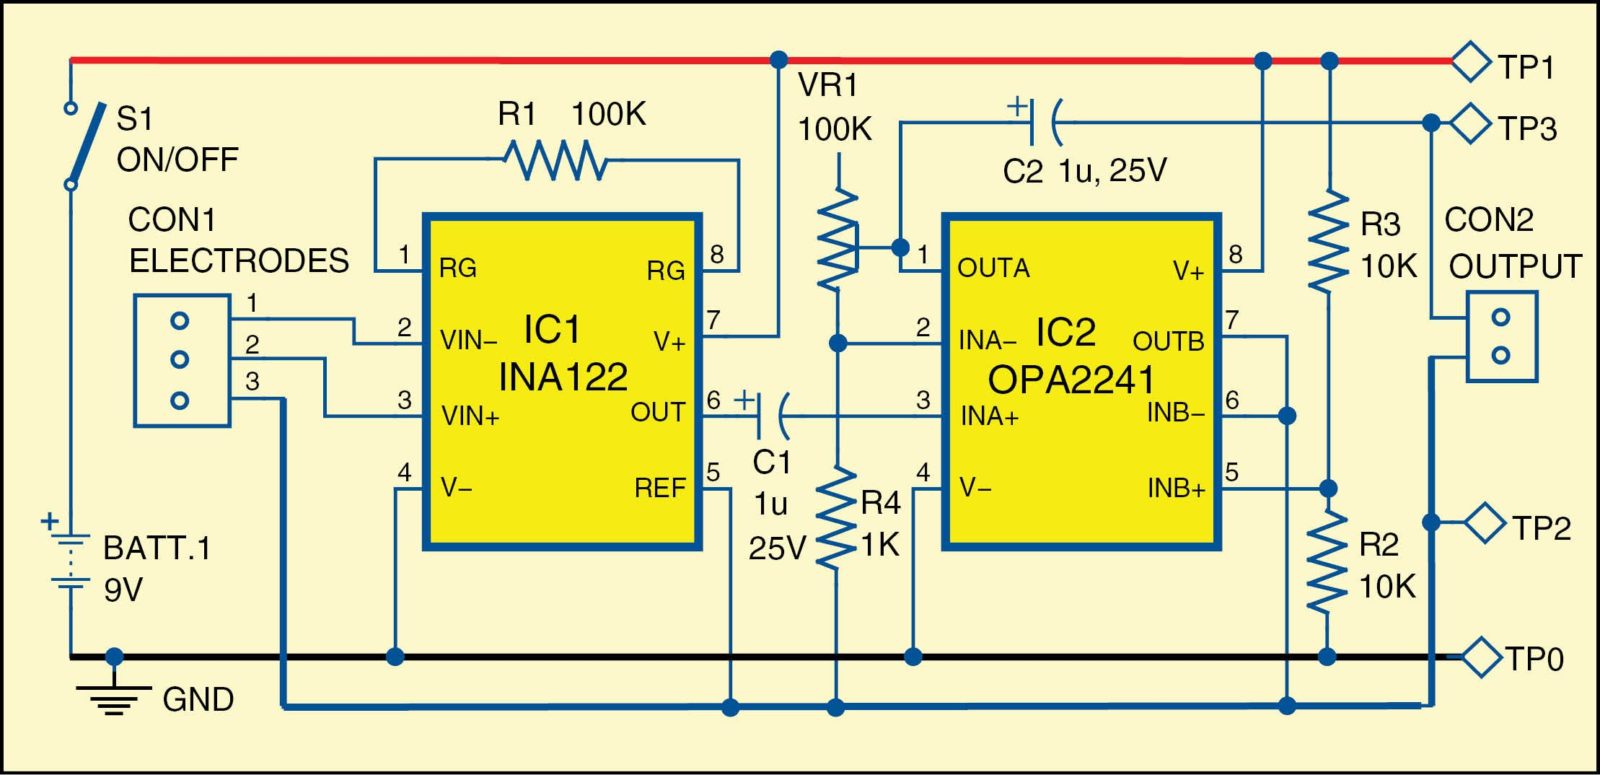 Circuit diagram of HMI through Electromyography